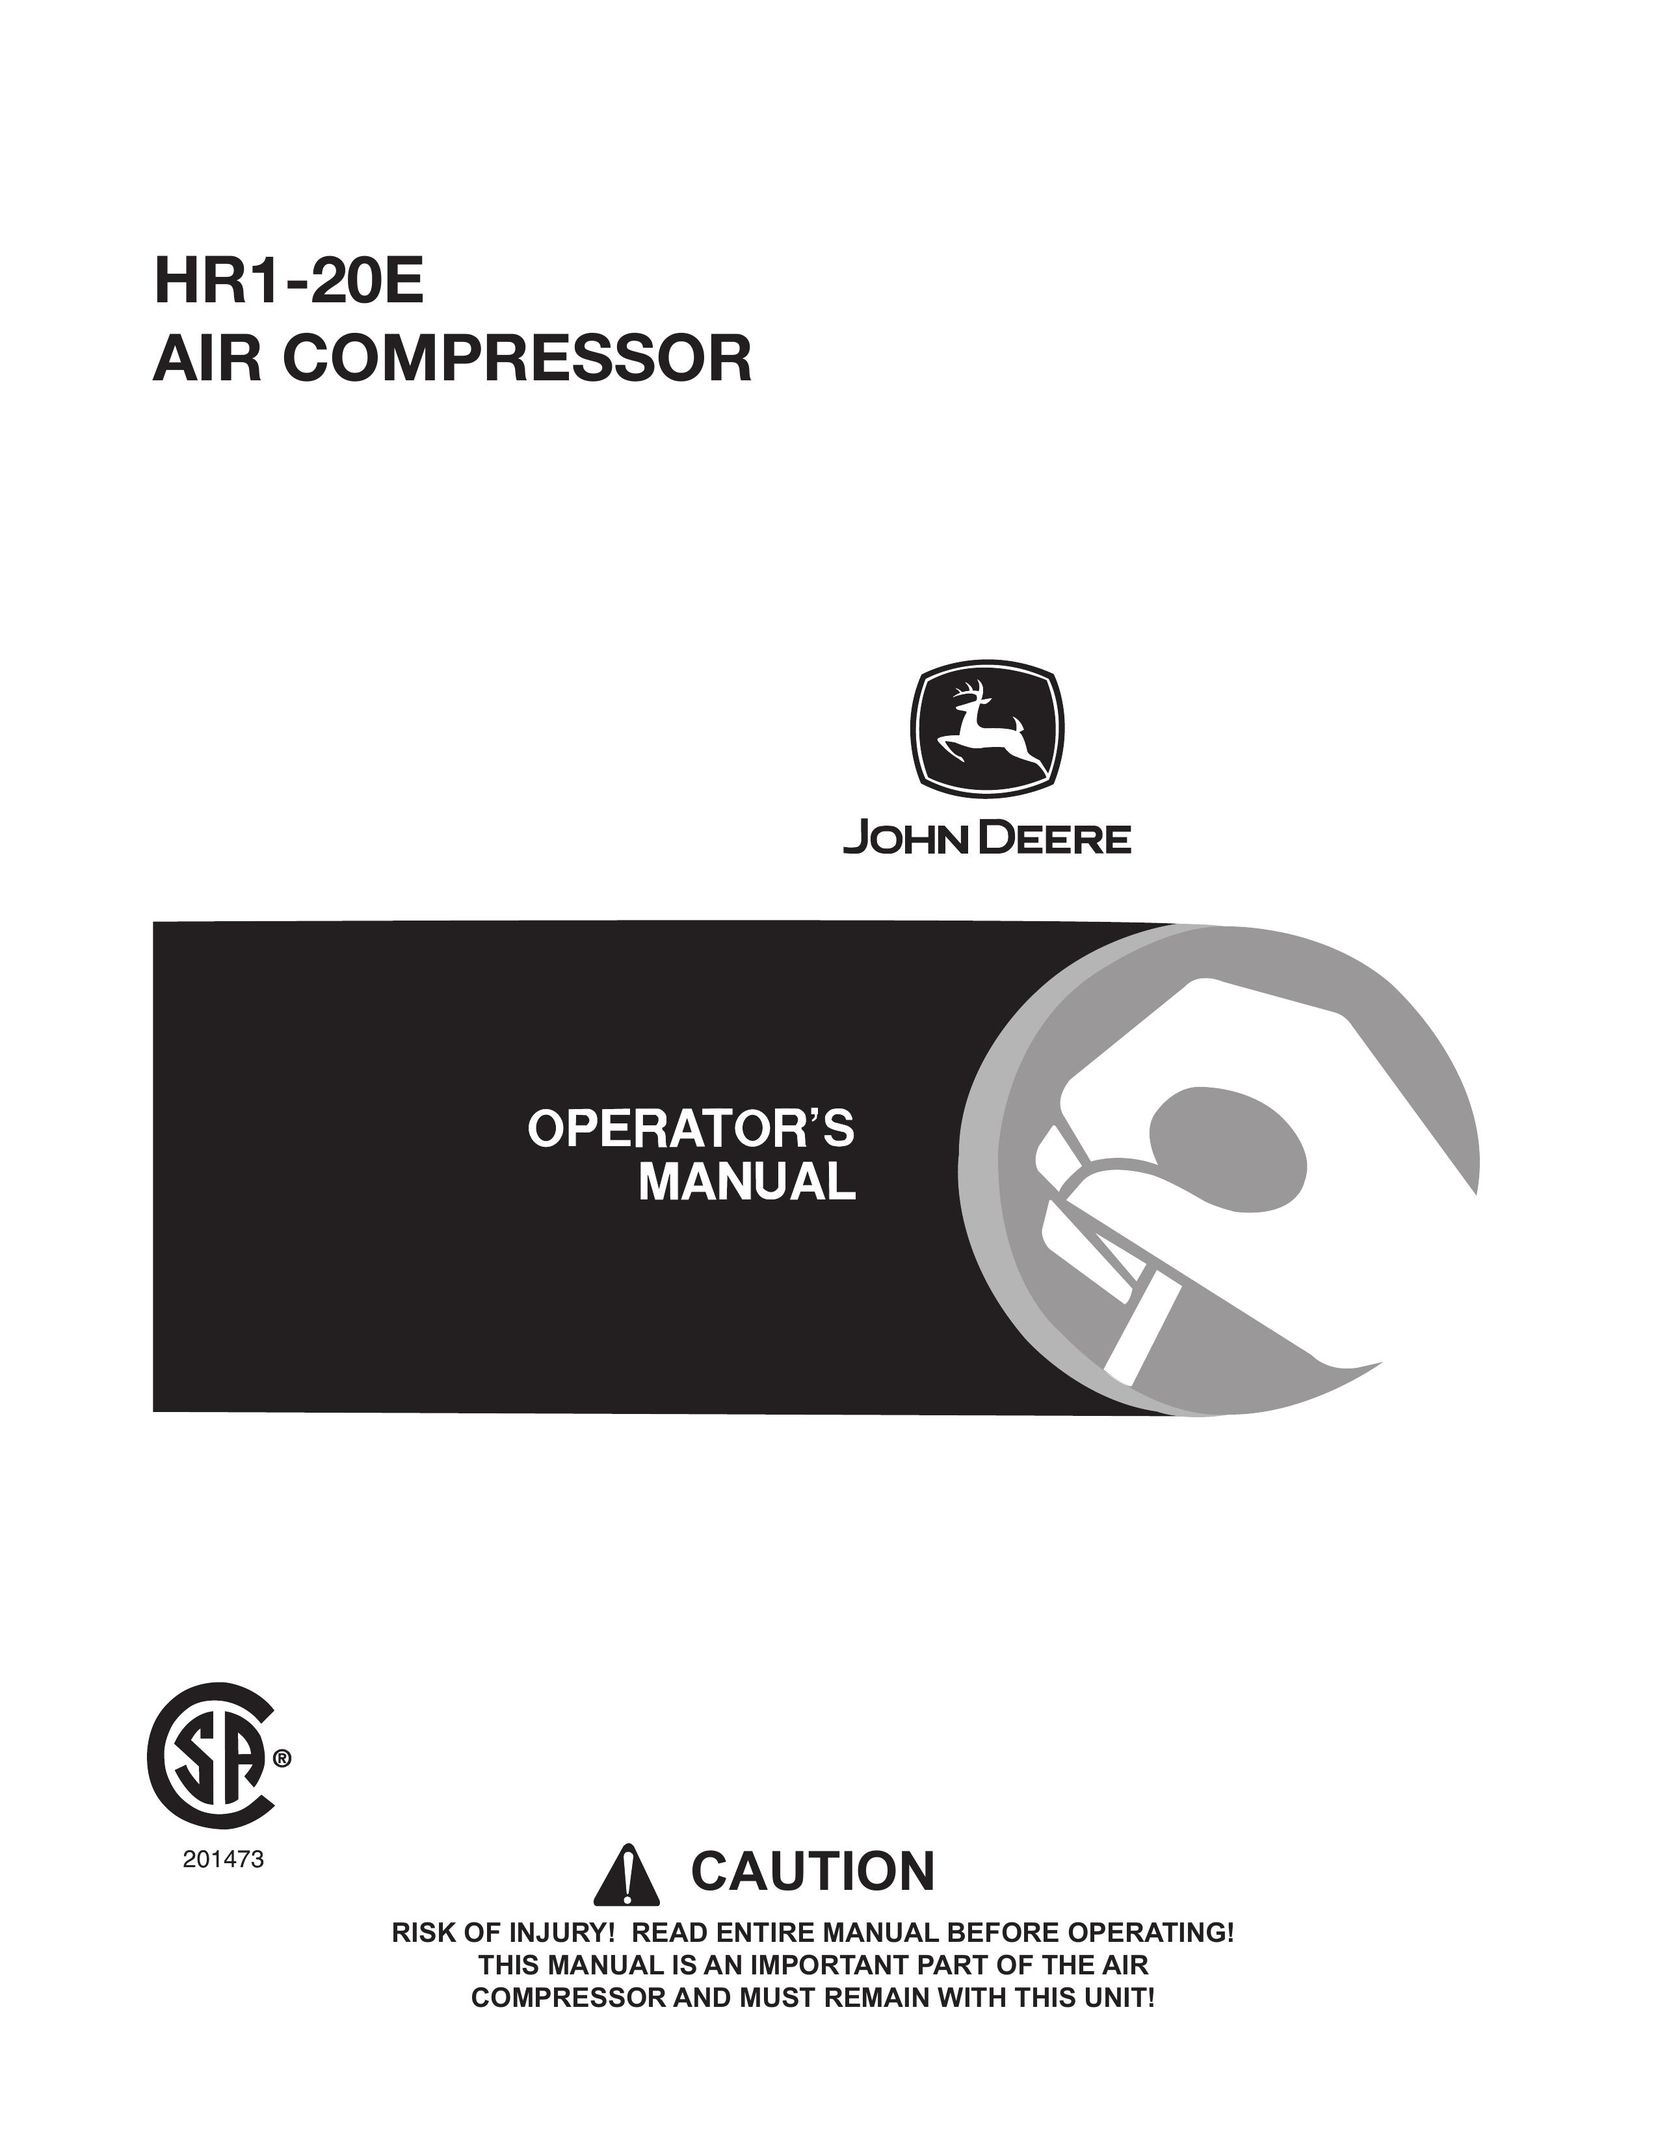 John Deere HR1-20E Air Compressor User Manual